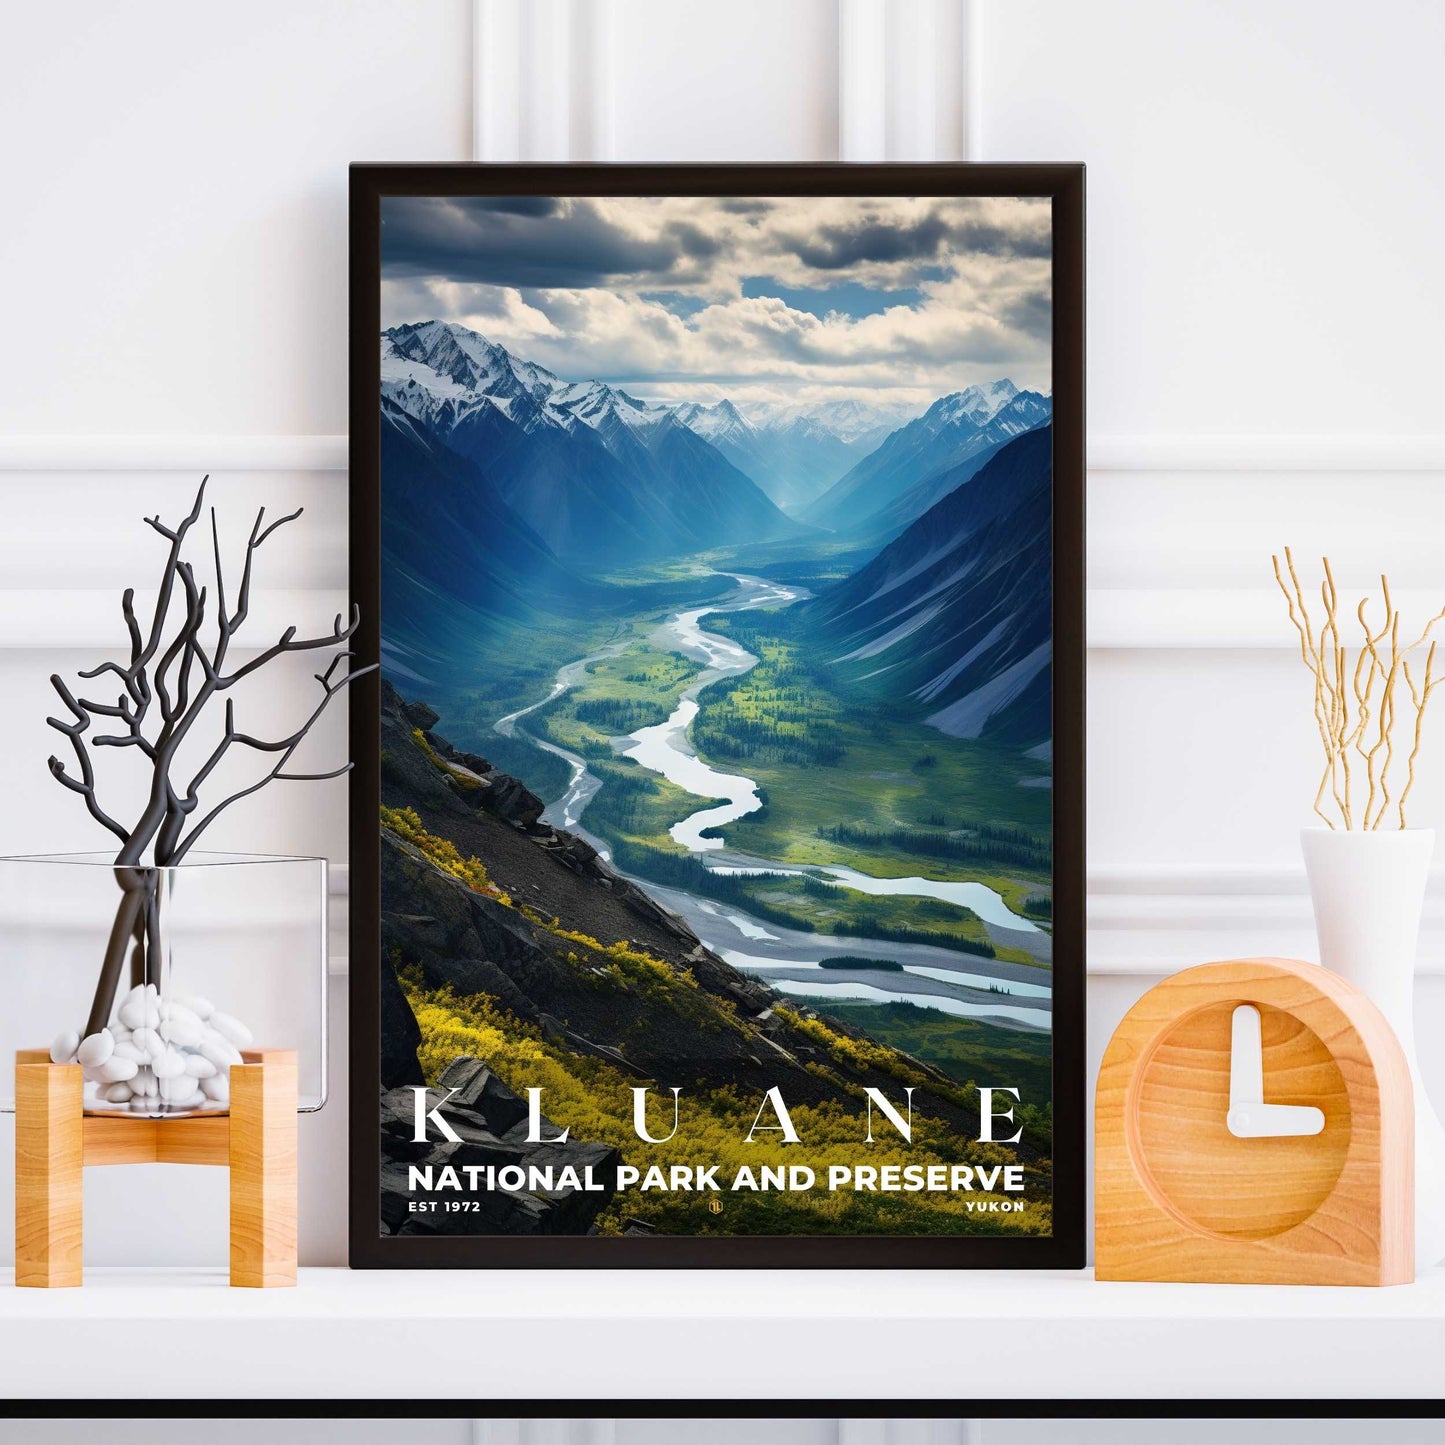 Kluane National Park Reserve Poster | S10